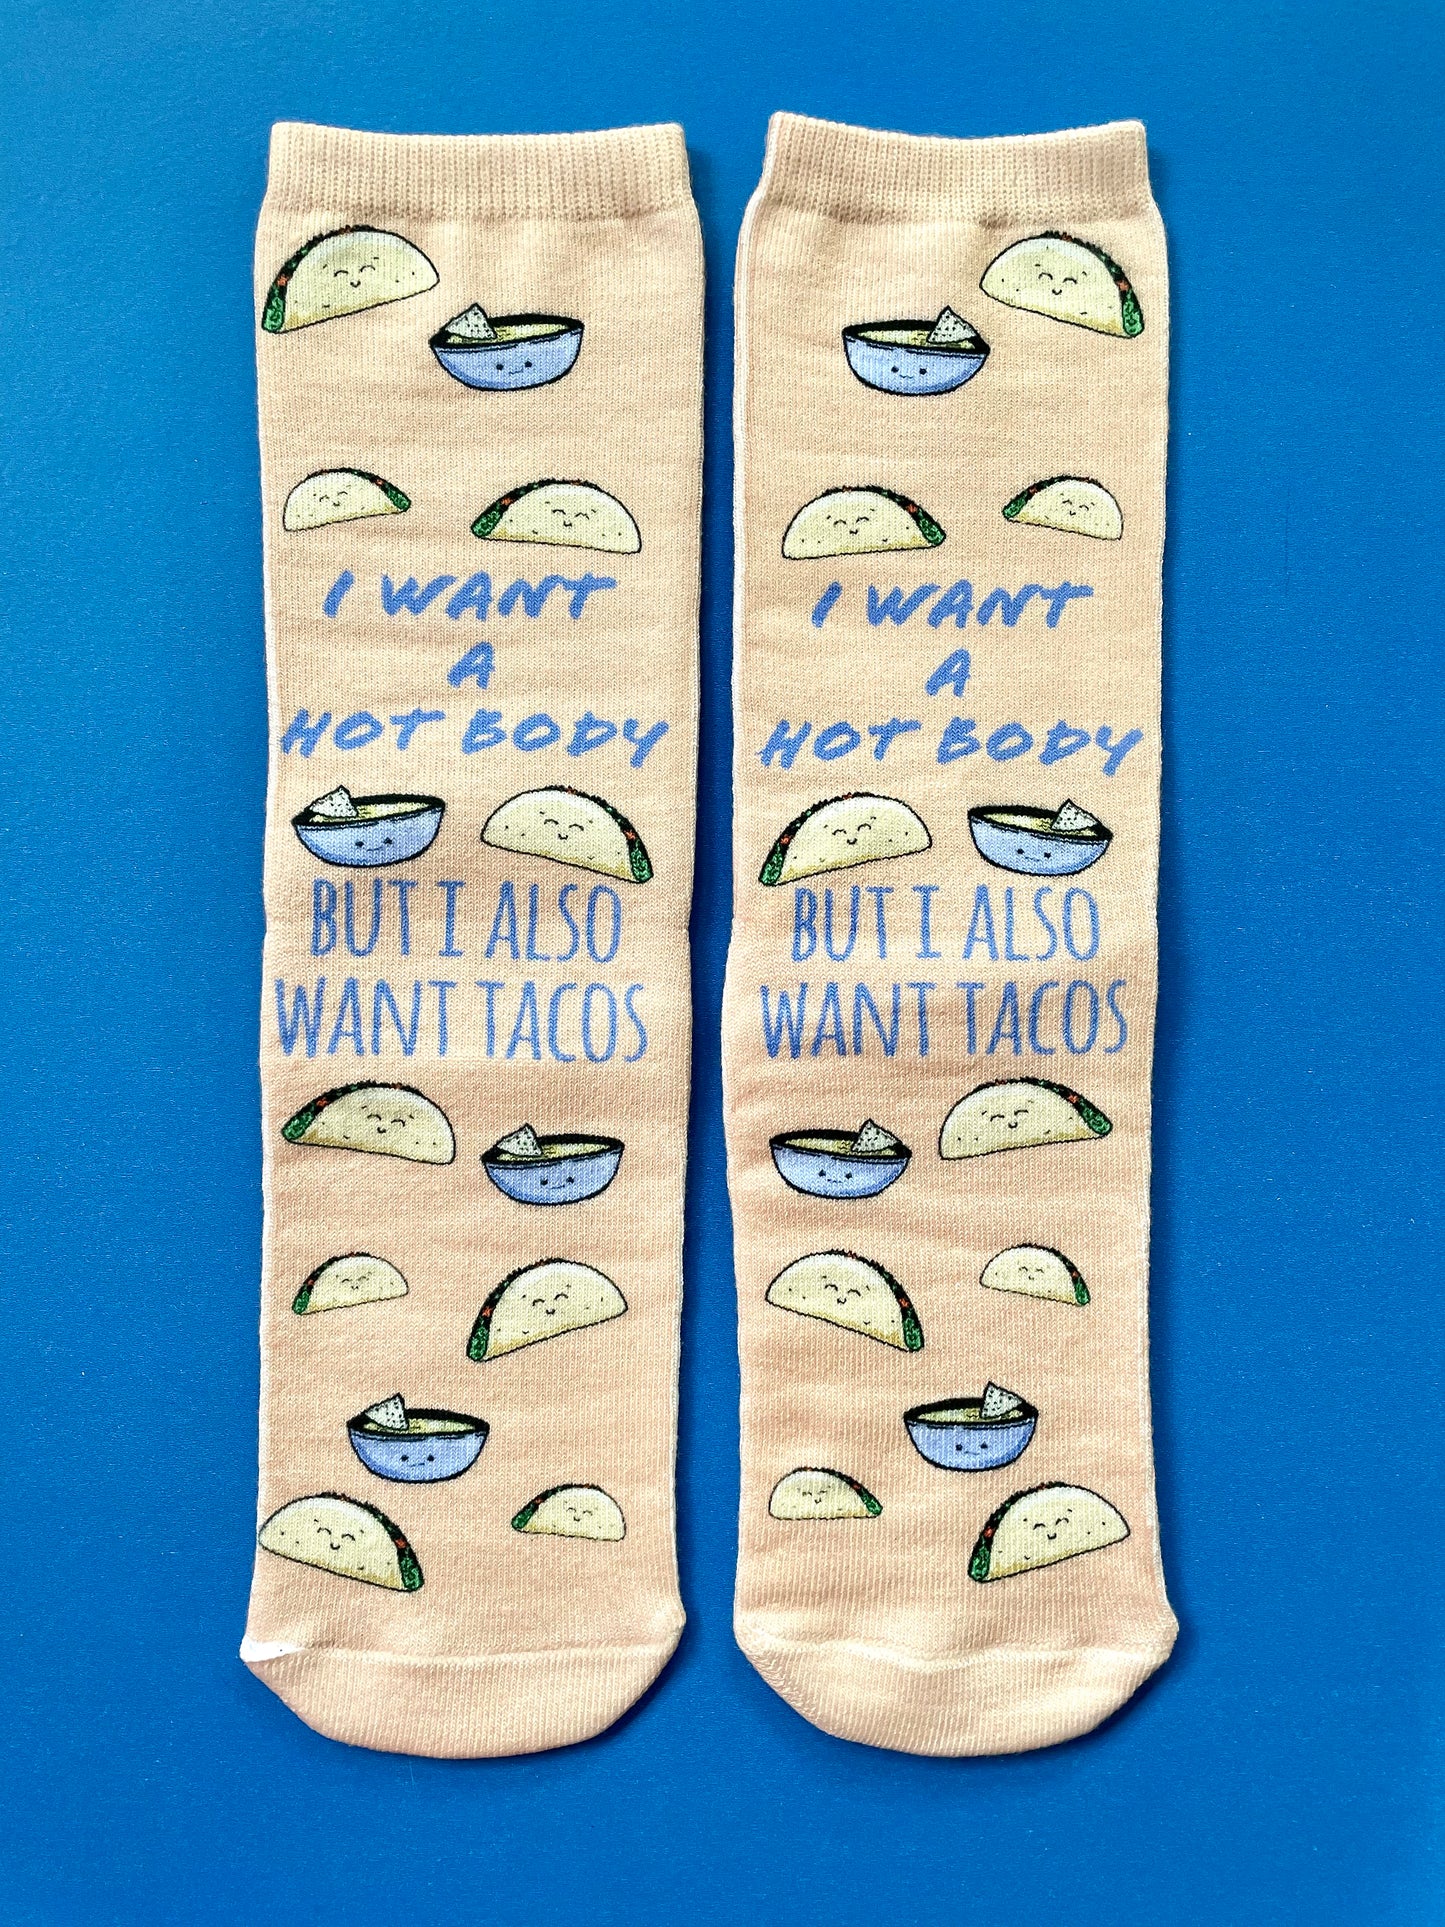 I Want A Hot Body But I Also Want Tacos - Novelty Socks - MoonlightMakers